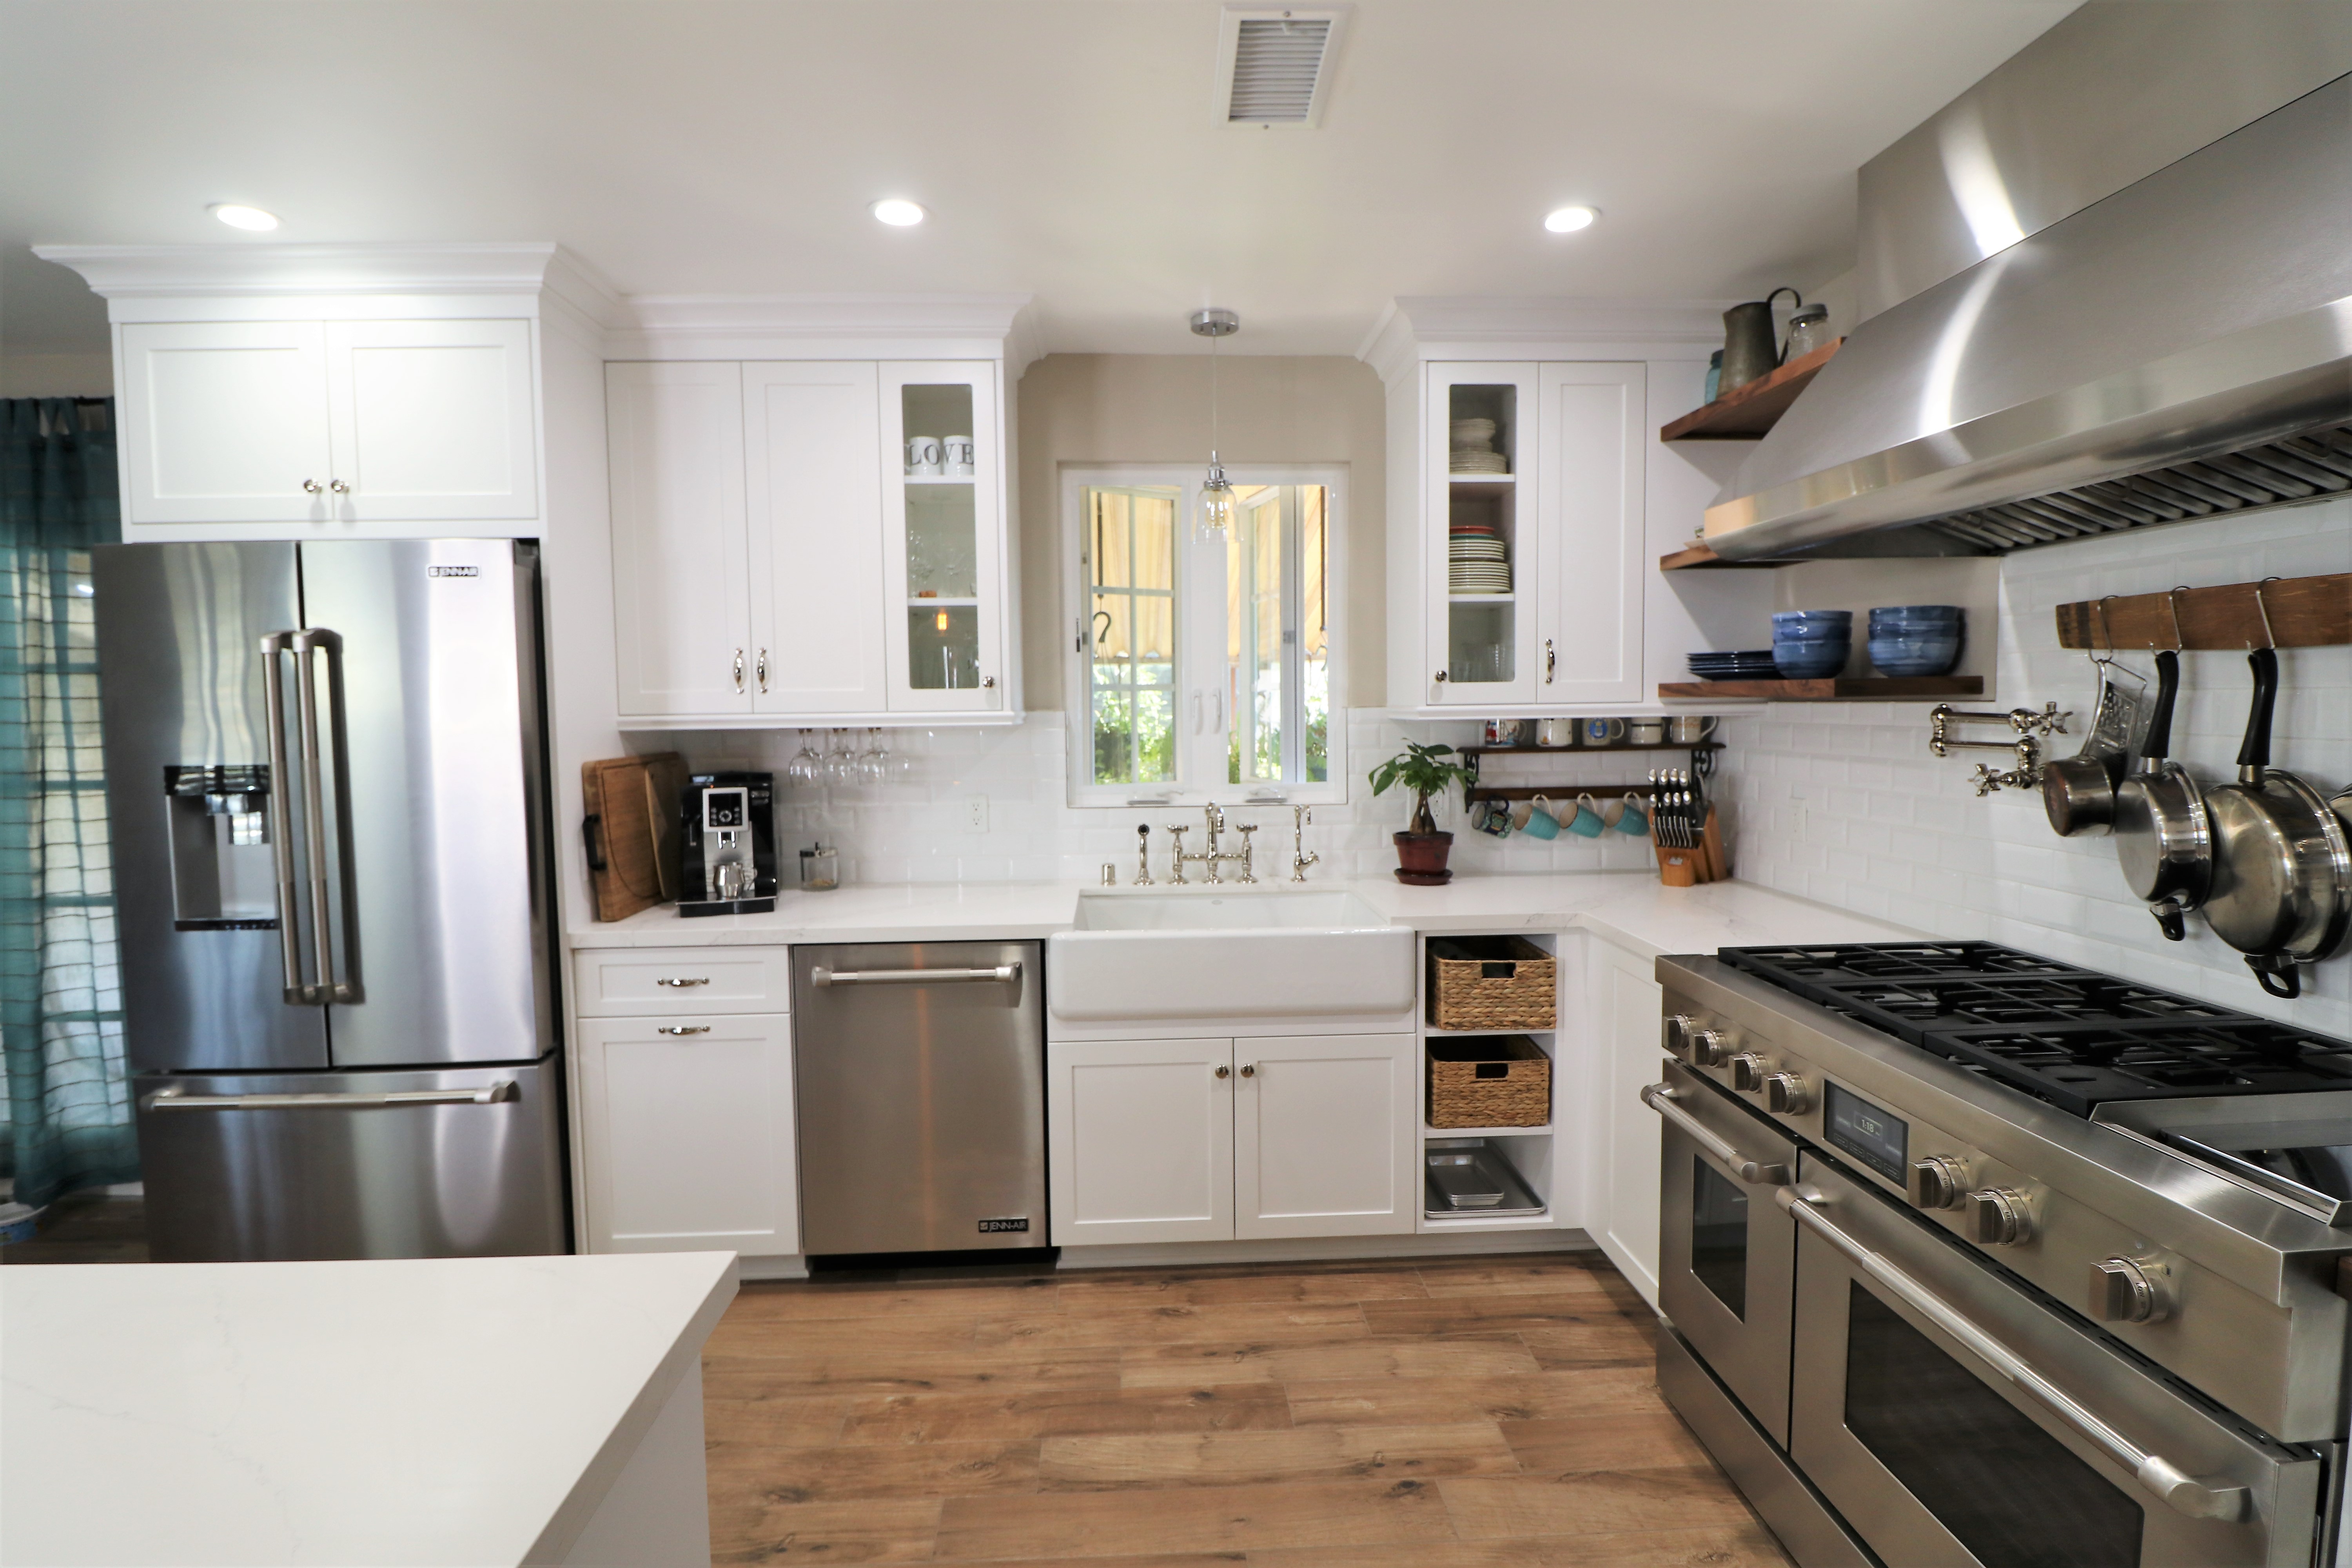 Figueroa Residence: 'Open Concept' Kitchen Remodel in Gardena, CA